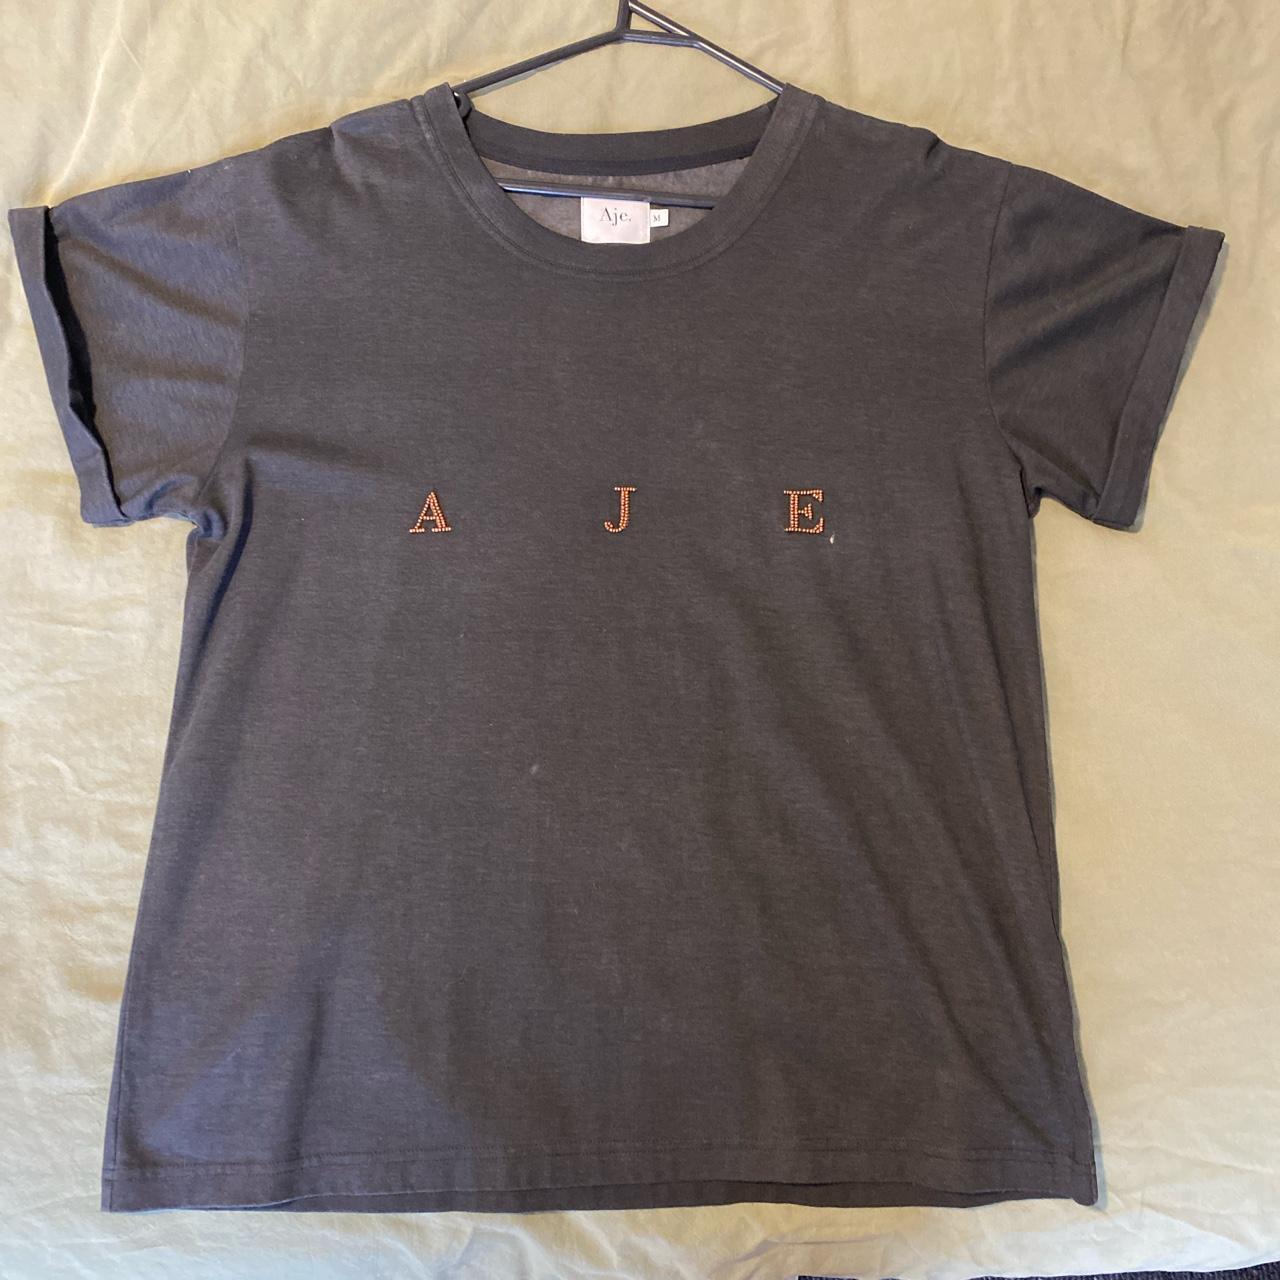 aje t-shirt - Depop